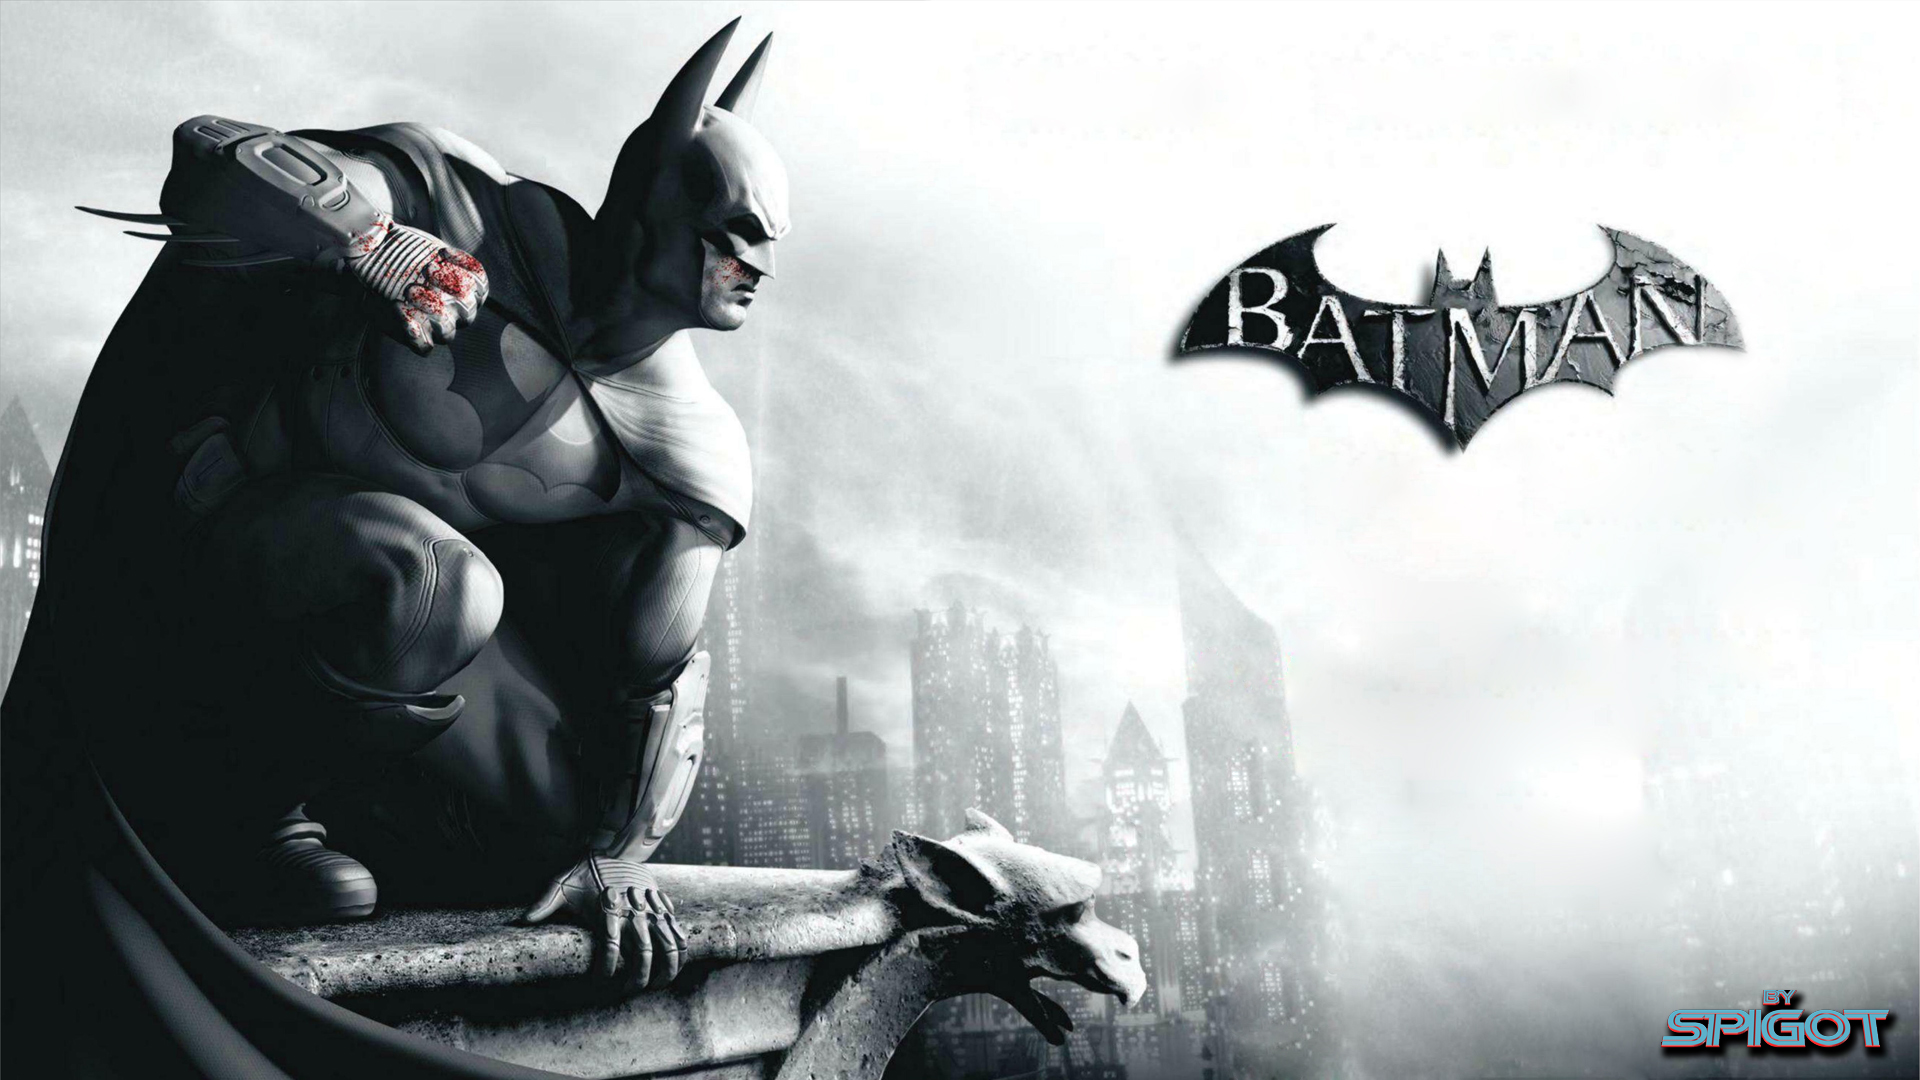 arkham city wallpaper,batman,fictional character,superhero,justice league,supervillain